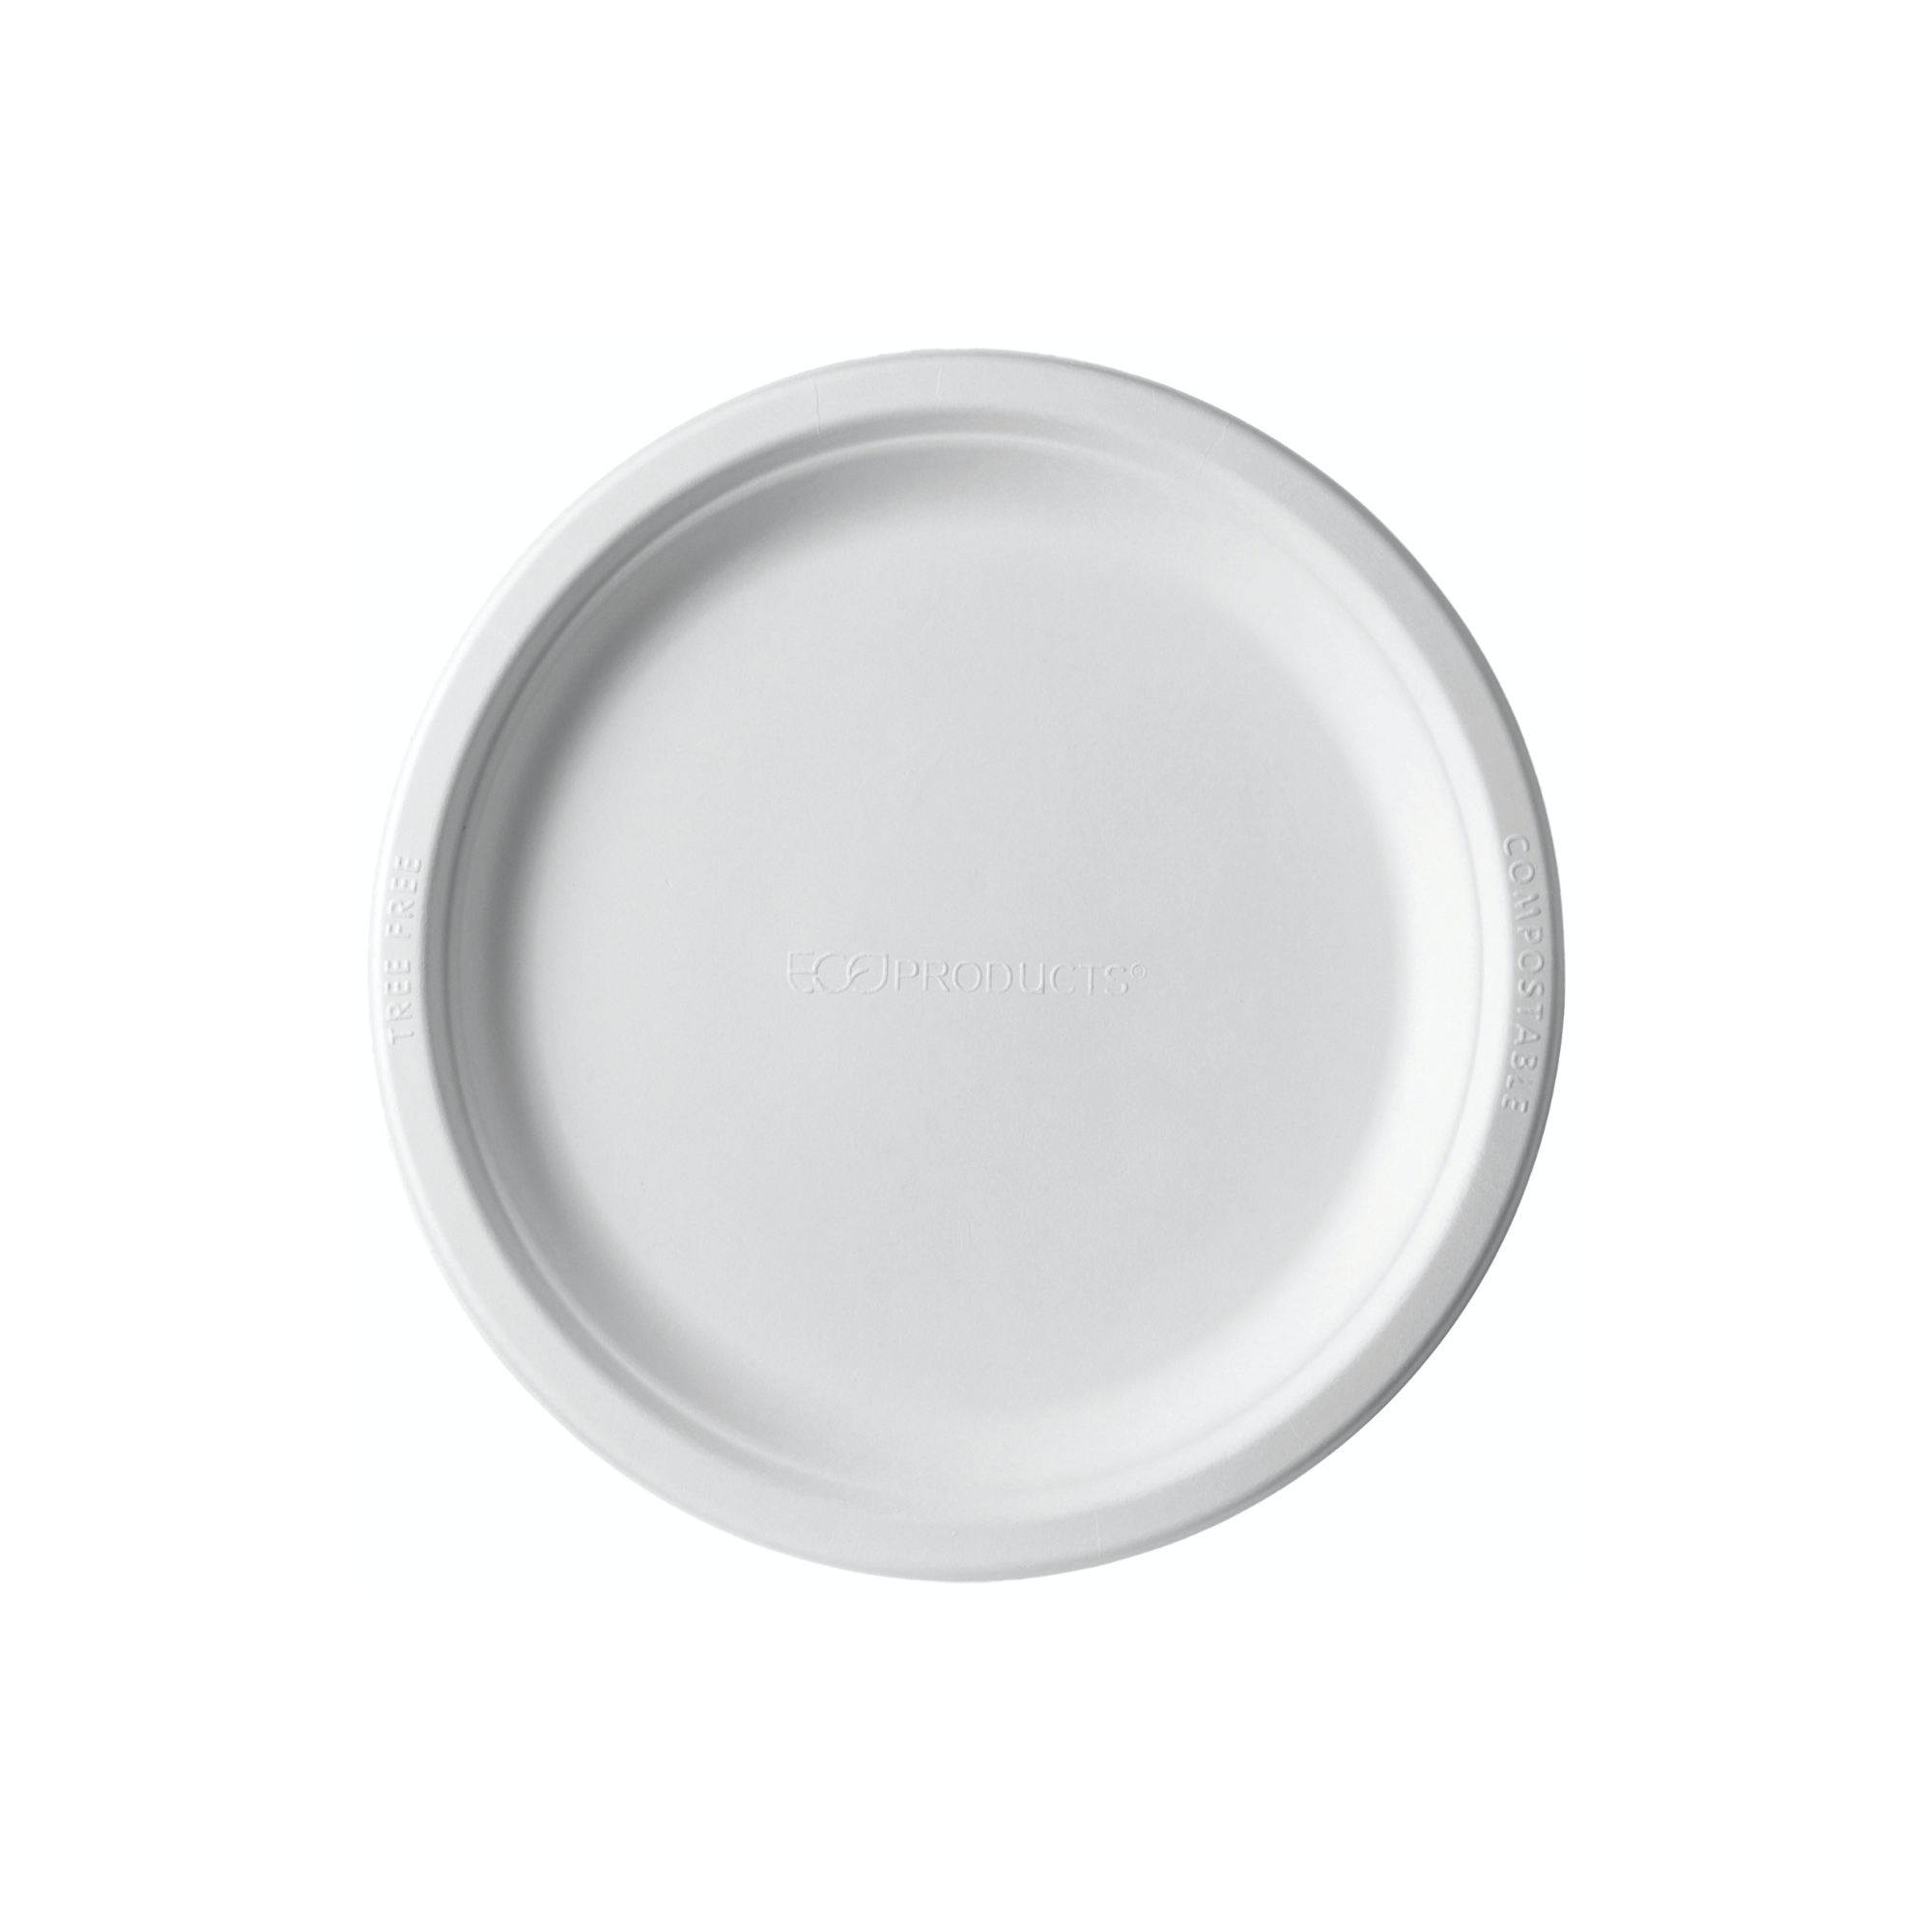  - Cukornád lapos tányér 175 mm - 50/1000 - Greenstic